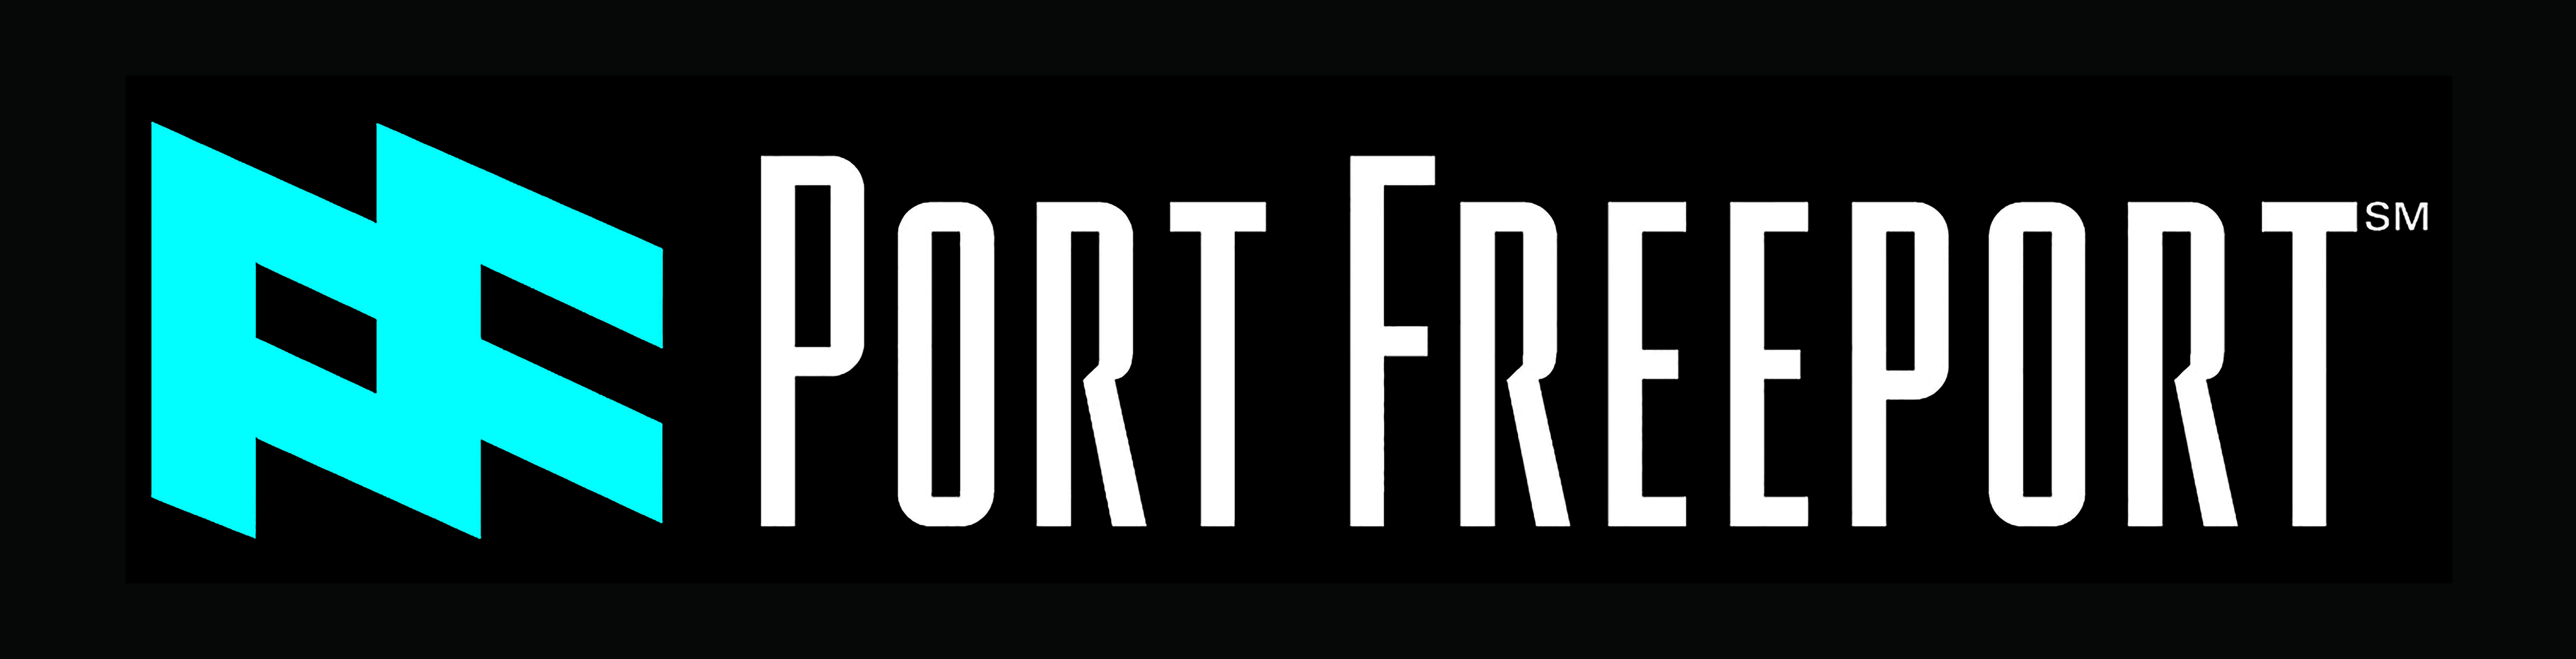 Freeport Logo - Port Freeport | Ports in TX | Media Library